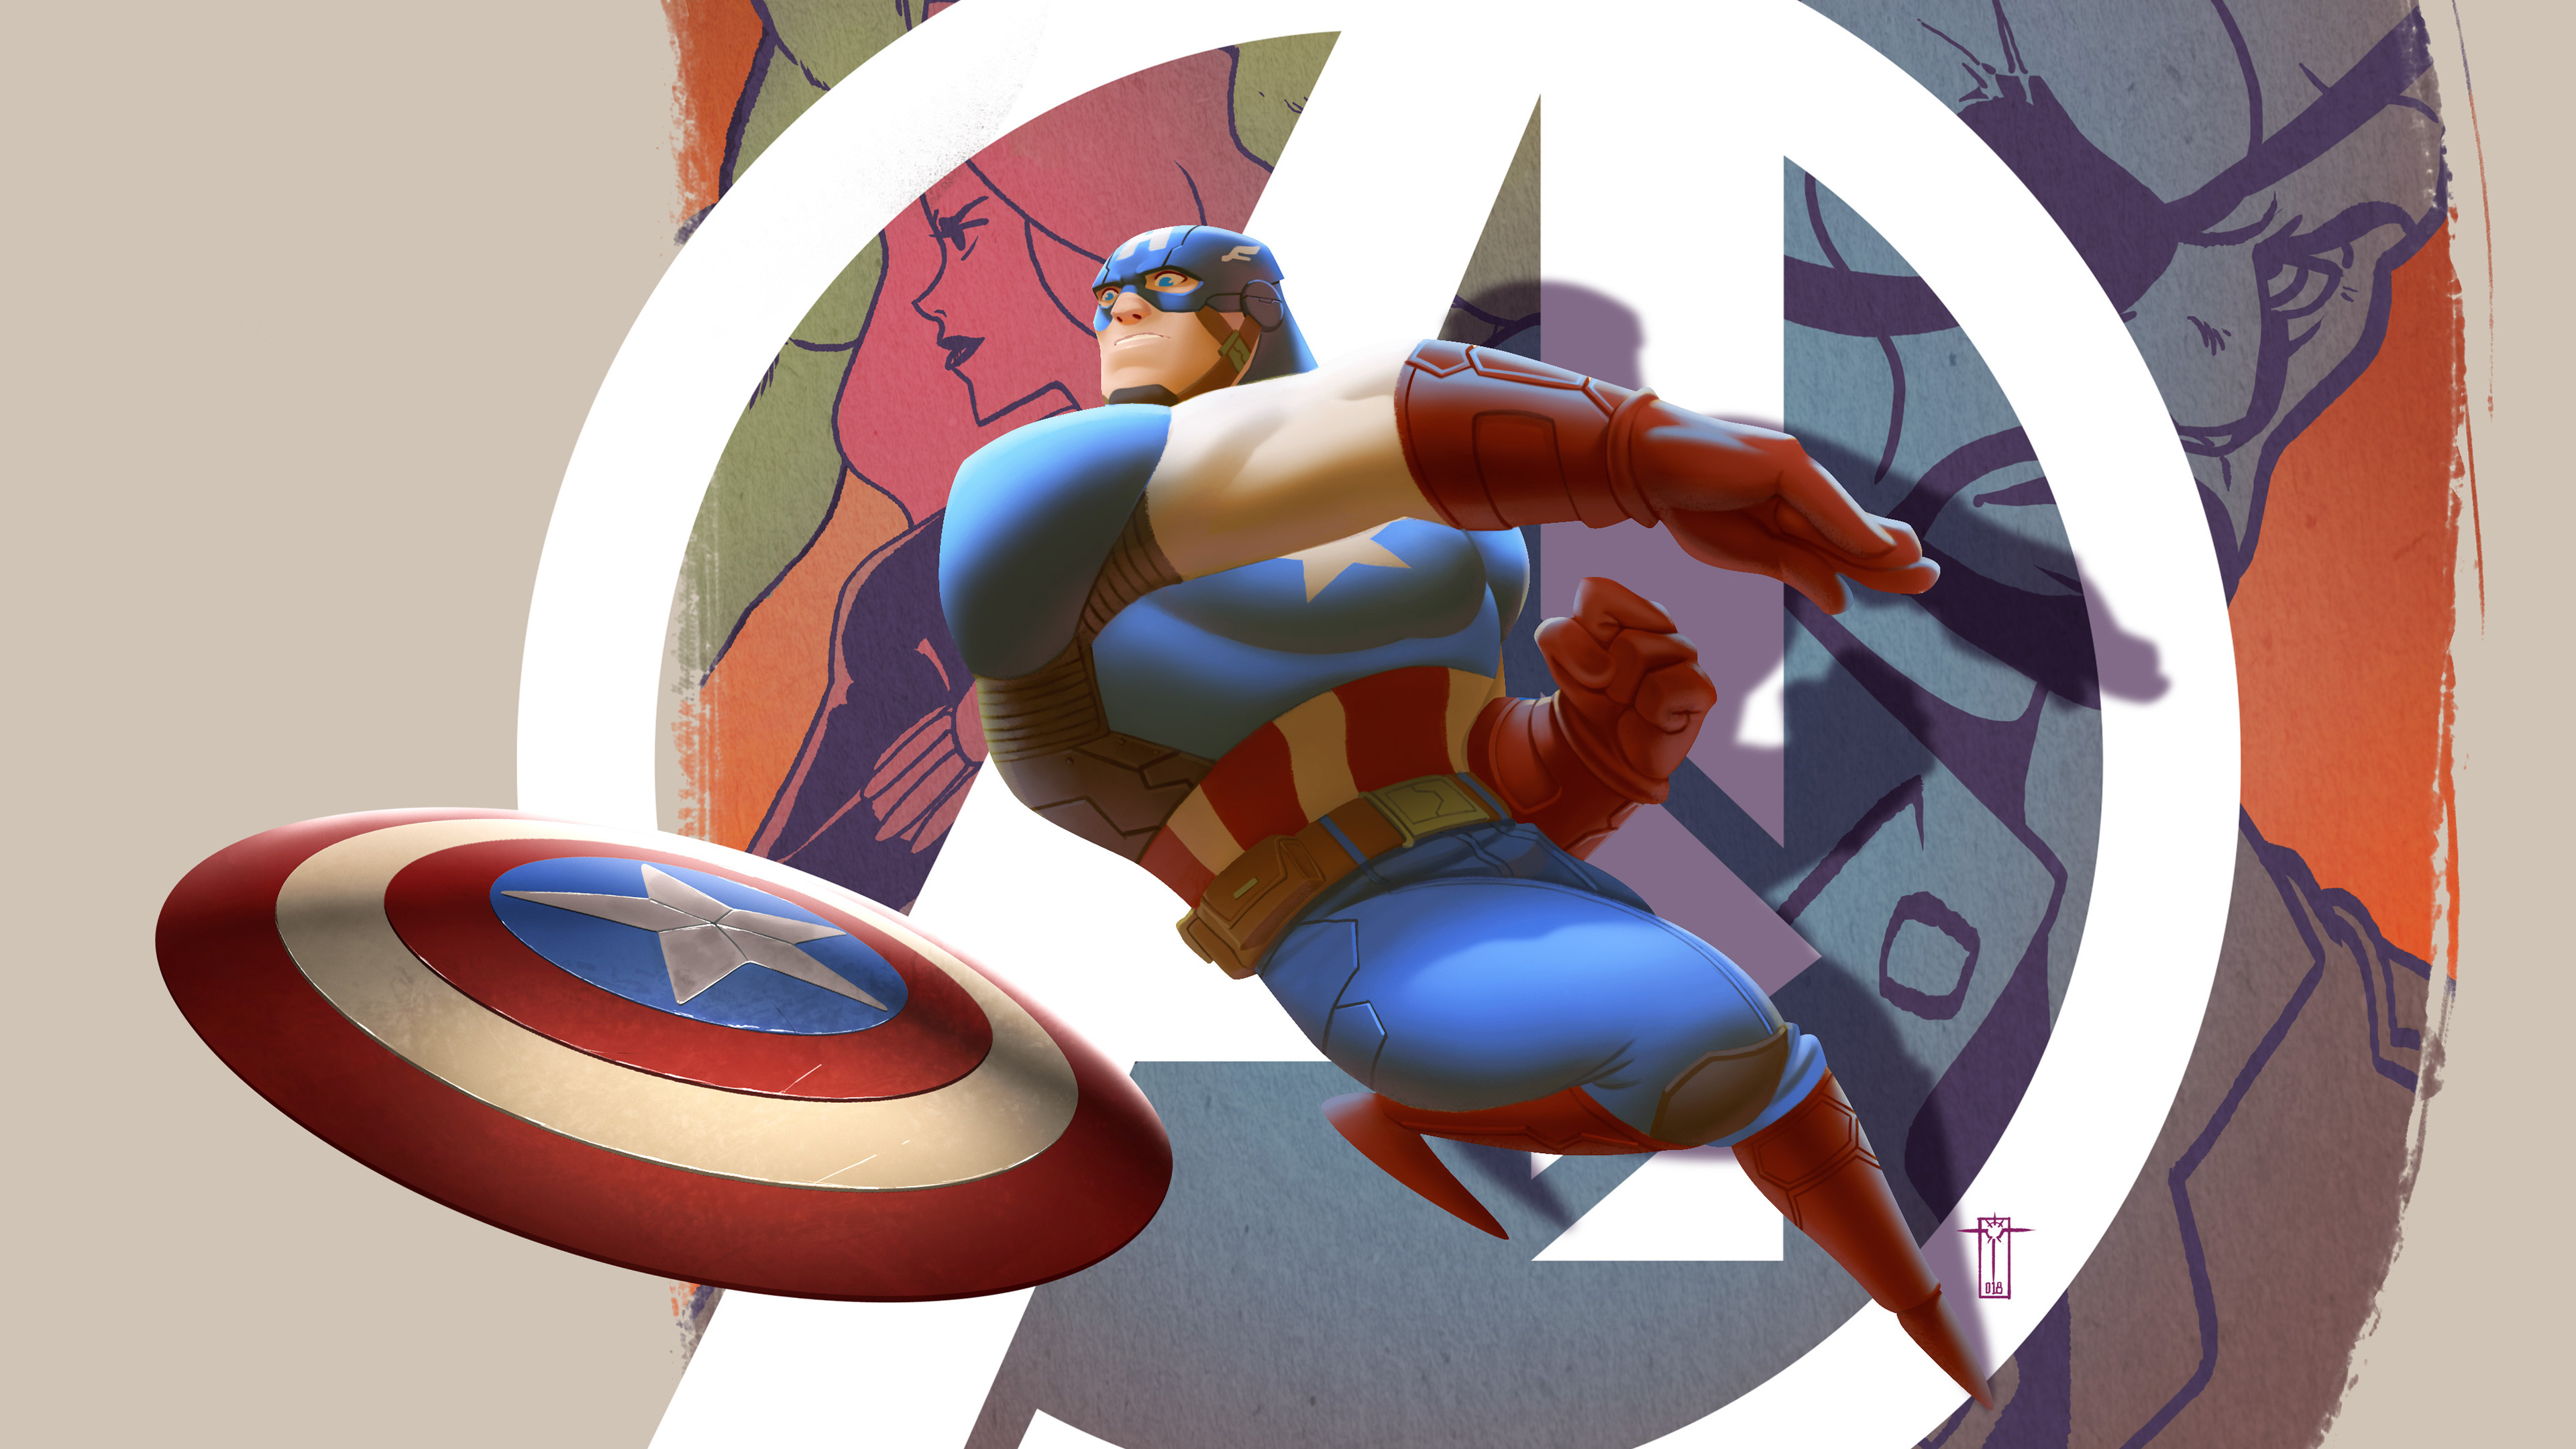 Wallpaper Hd Captain America Cartoon